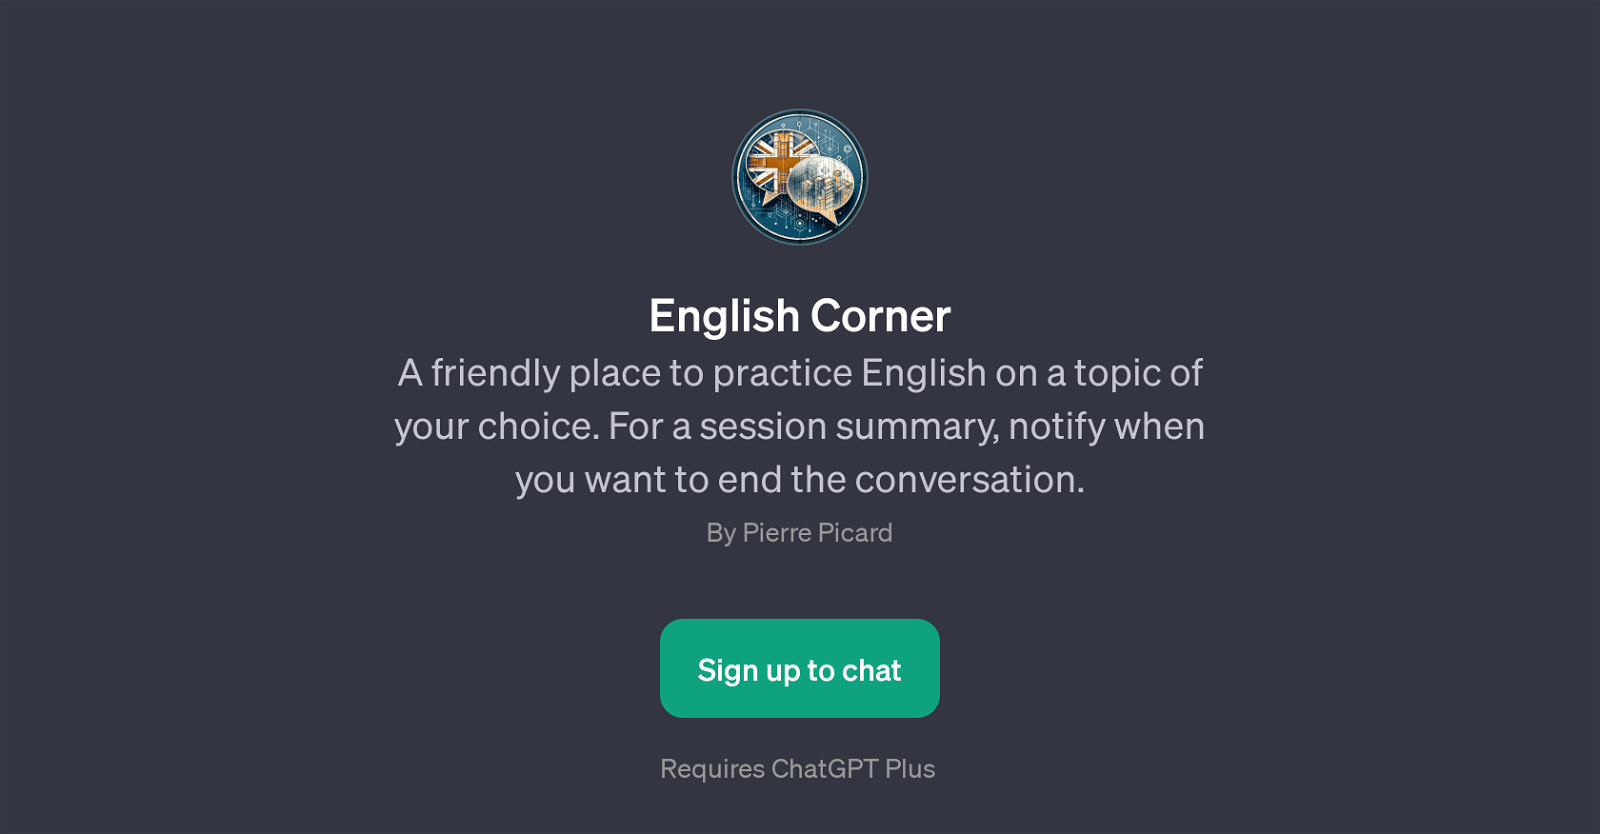 English Corner website